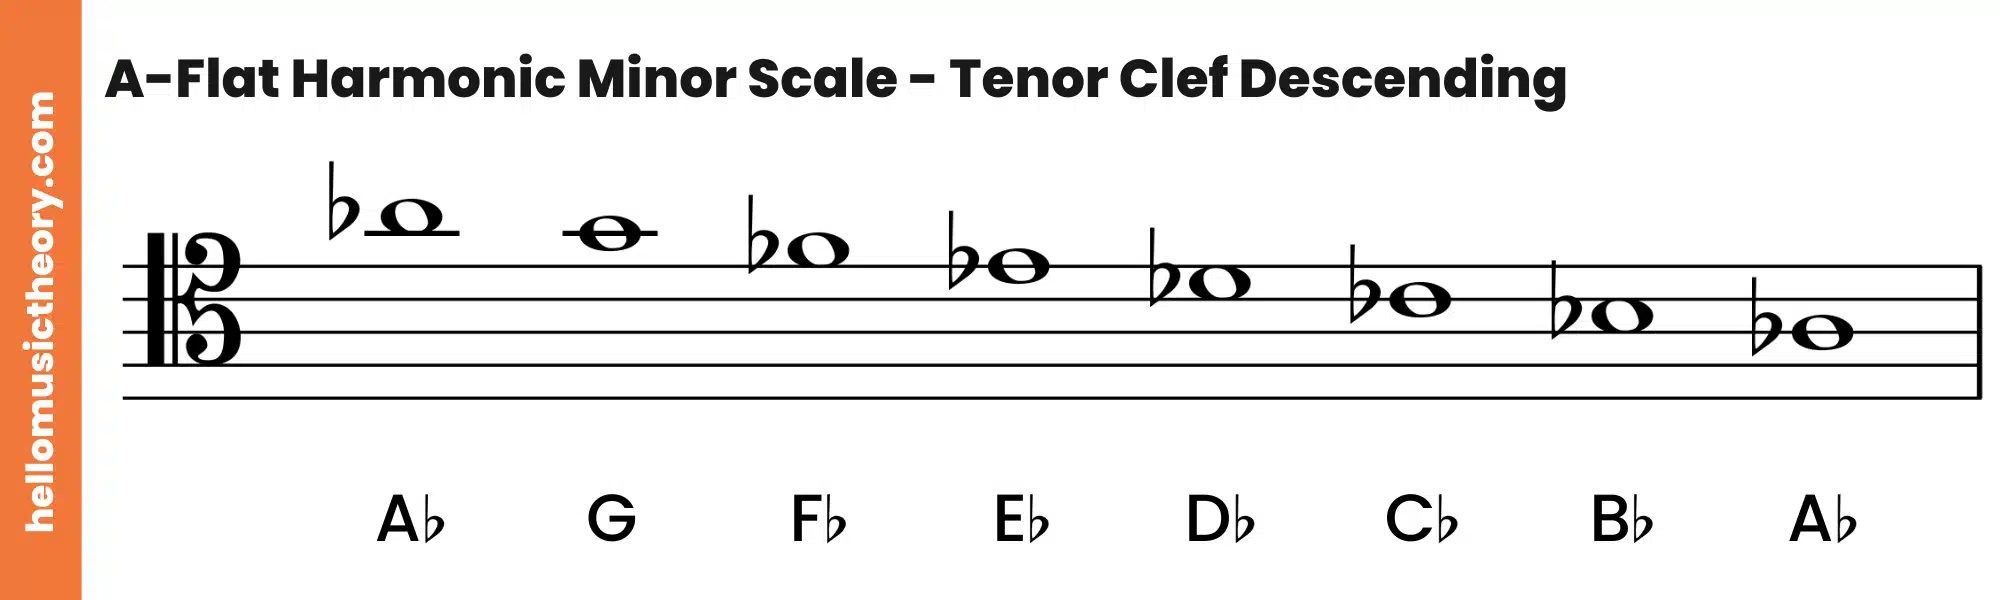 A-Flat Harmonic Minor Scale Tenor Clef Descending